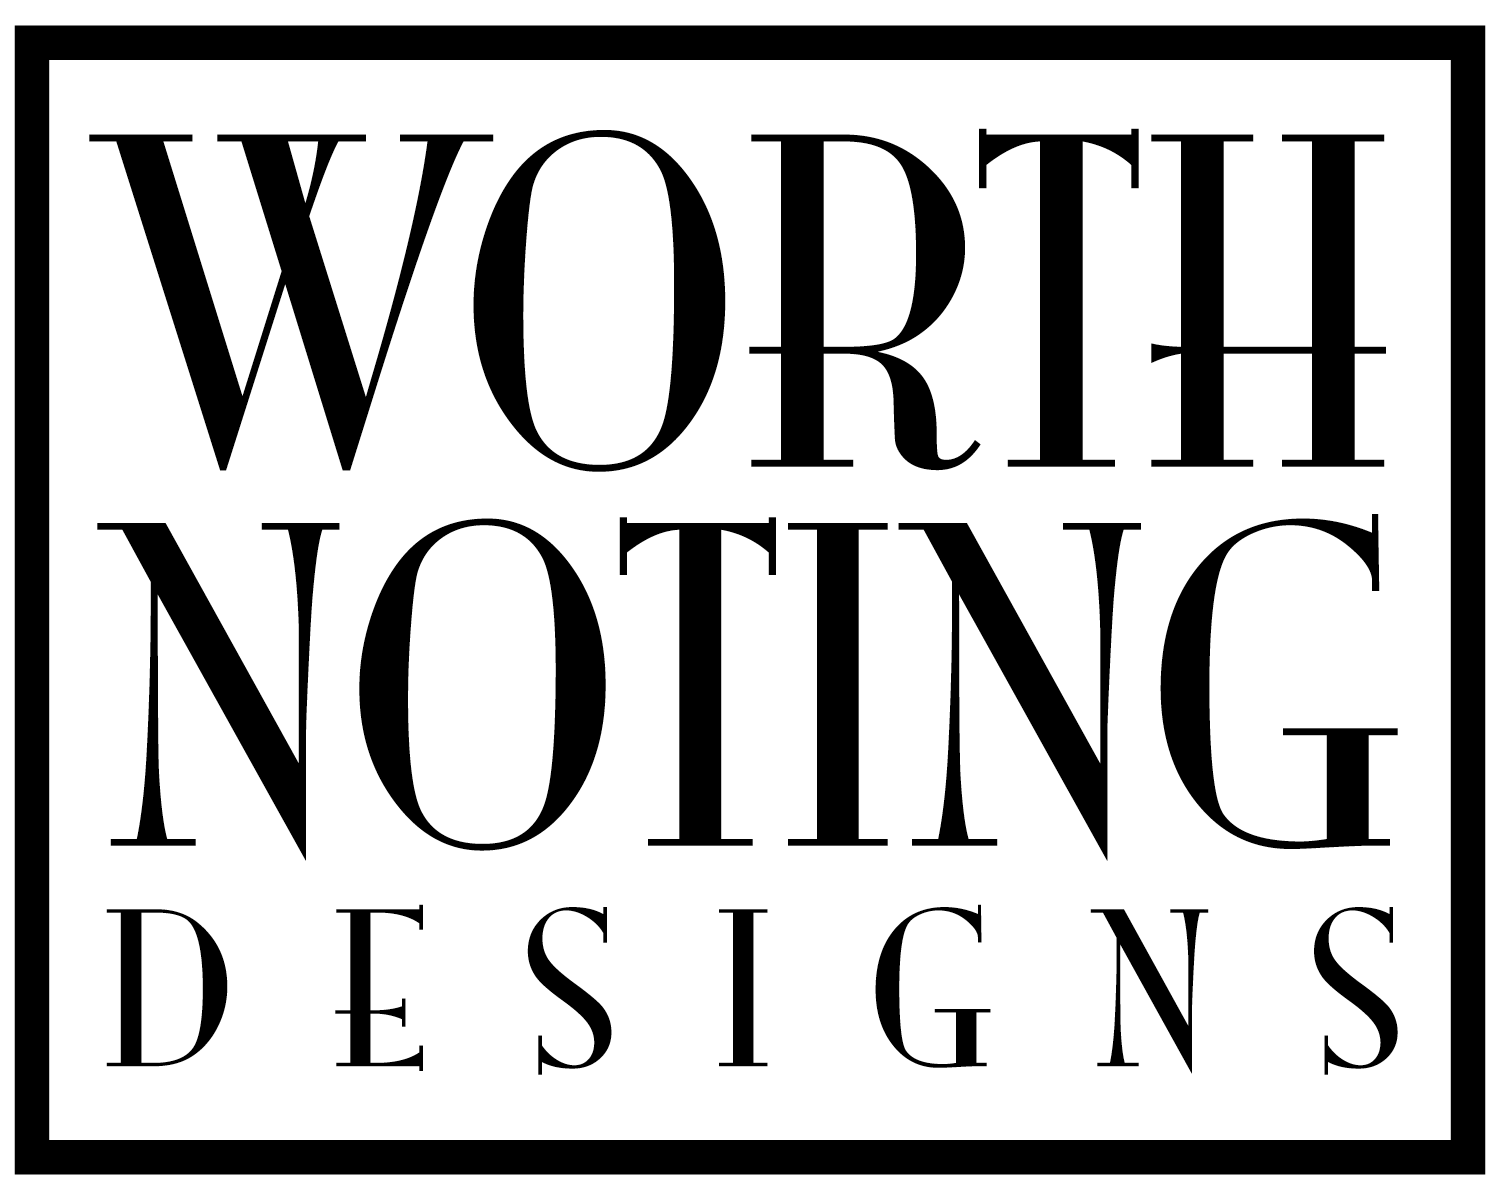 Worth Noting Designs